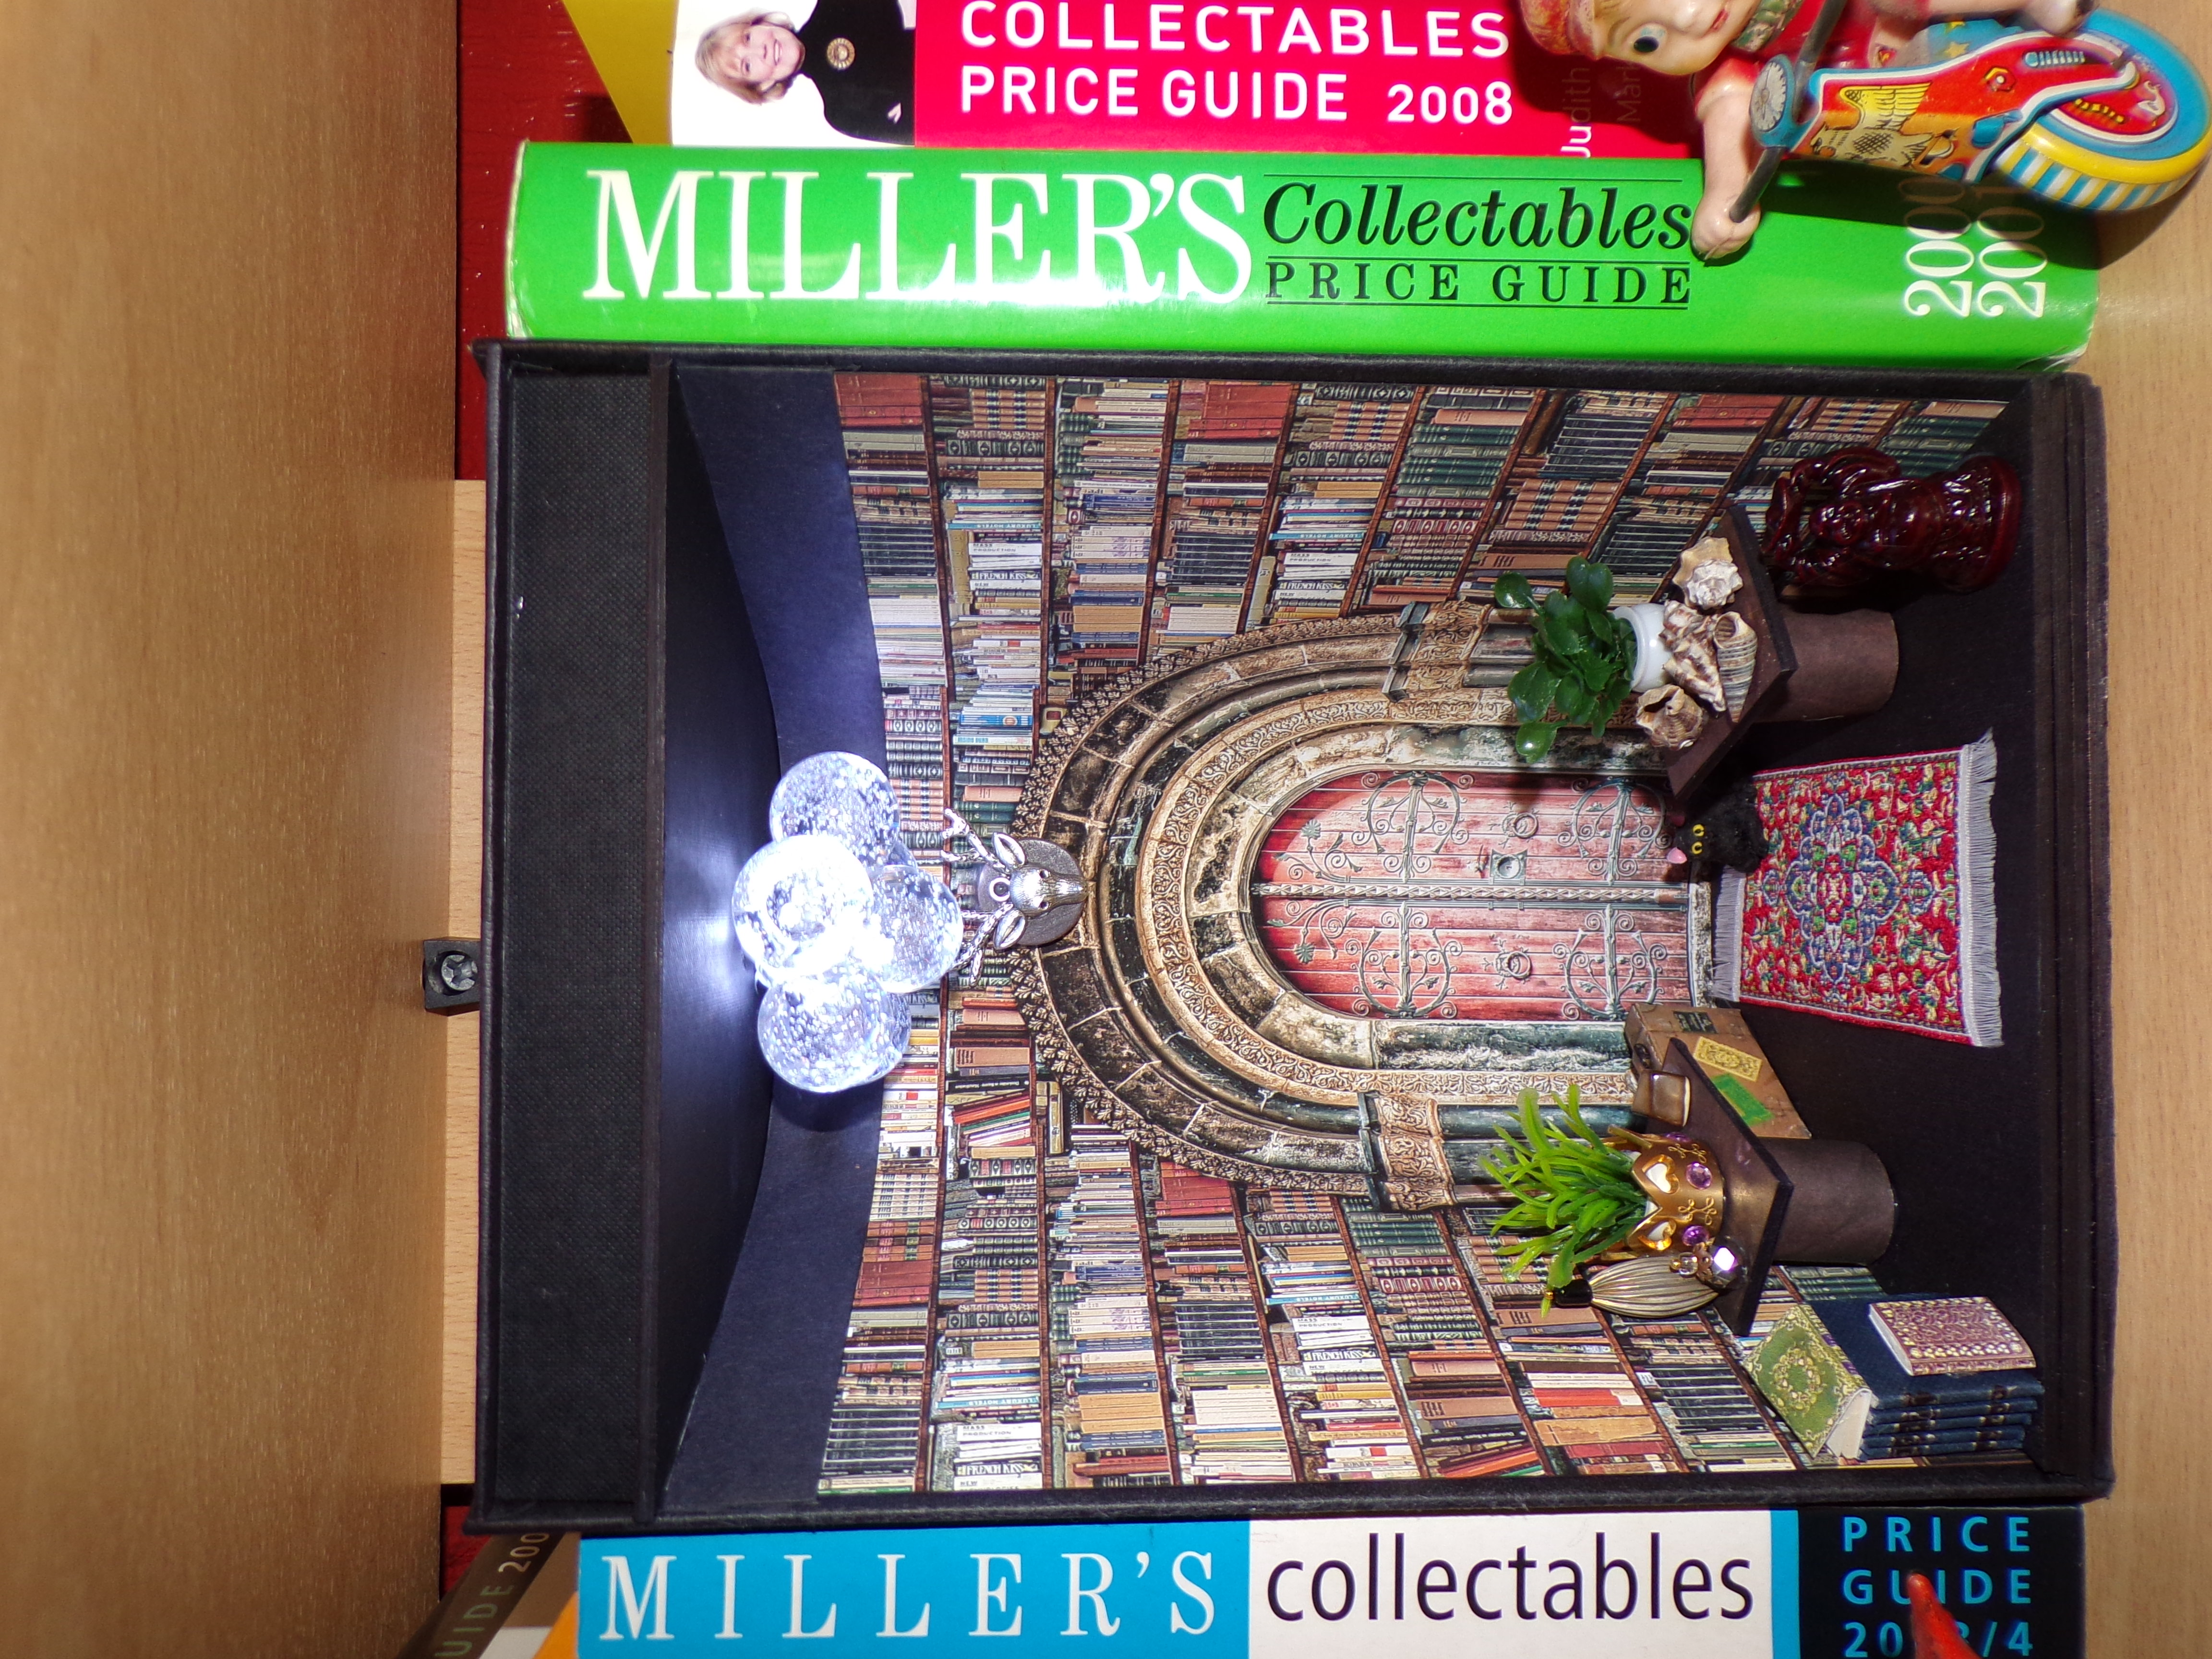 SOLD. Bookshelf art. Book Nook Diorama, Bookshelf insert. Booknook LED  lights. New design. Gothic library hallway. – Tilly Lane Treasures.